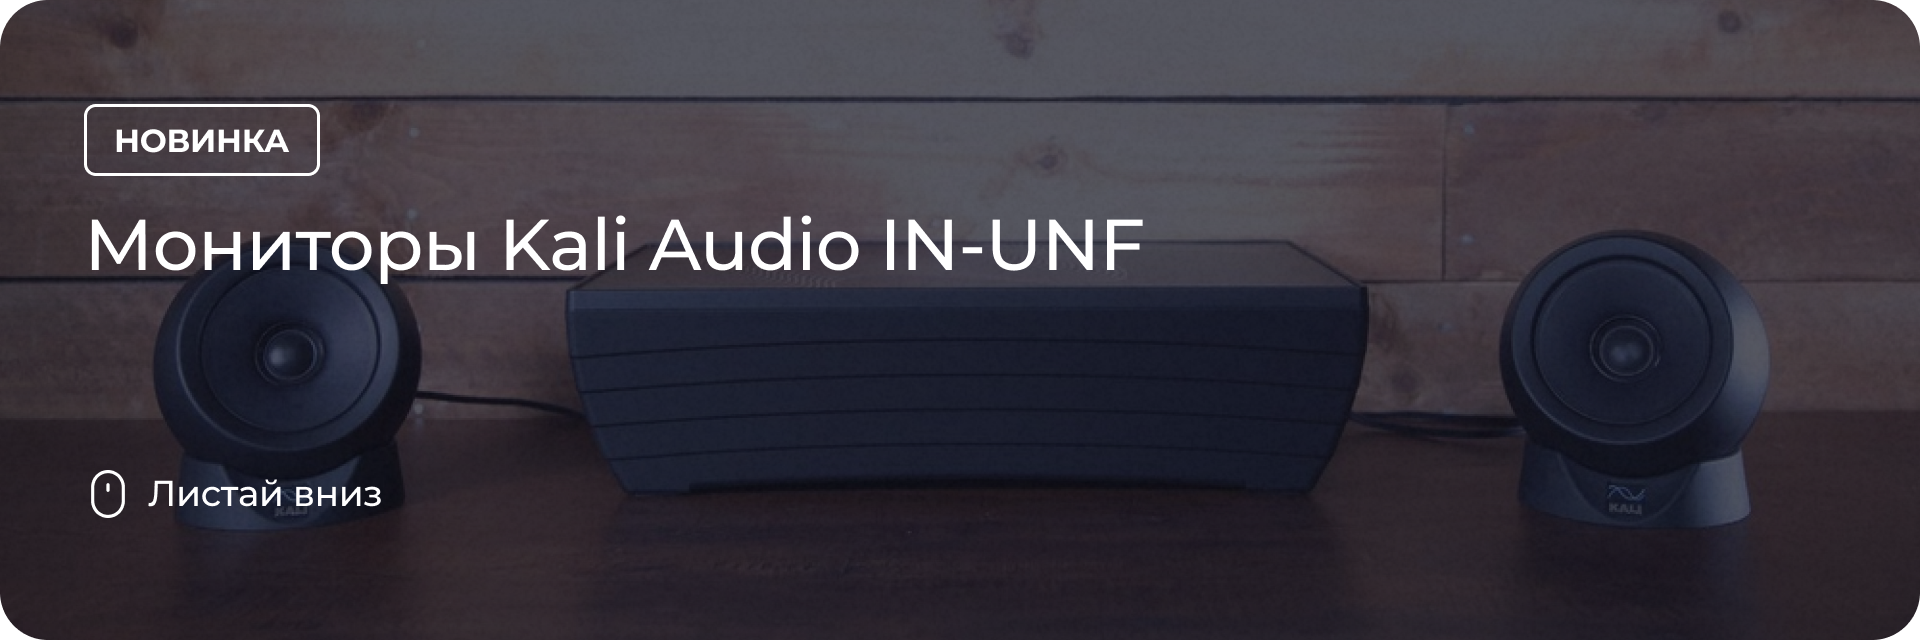 Мониторы Kali Audio IN-UNF